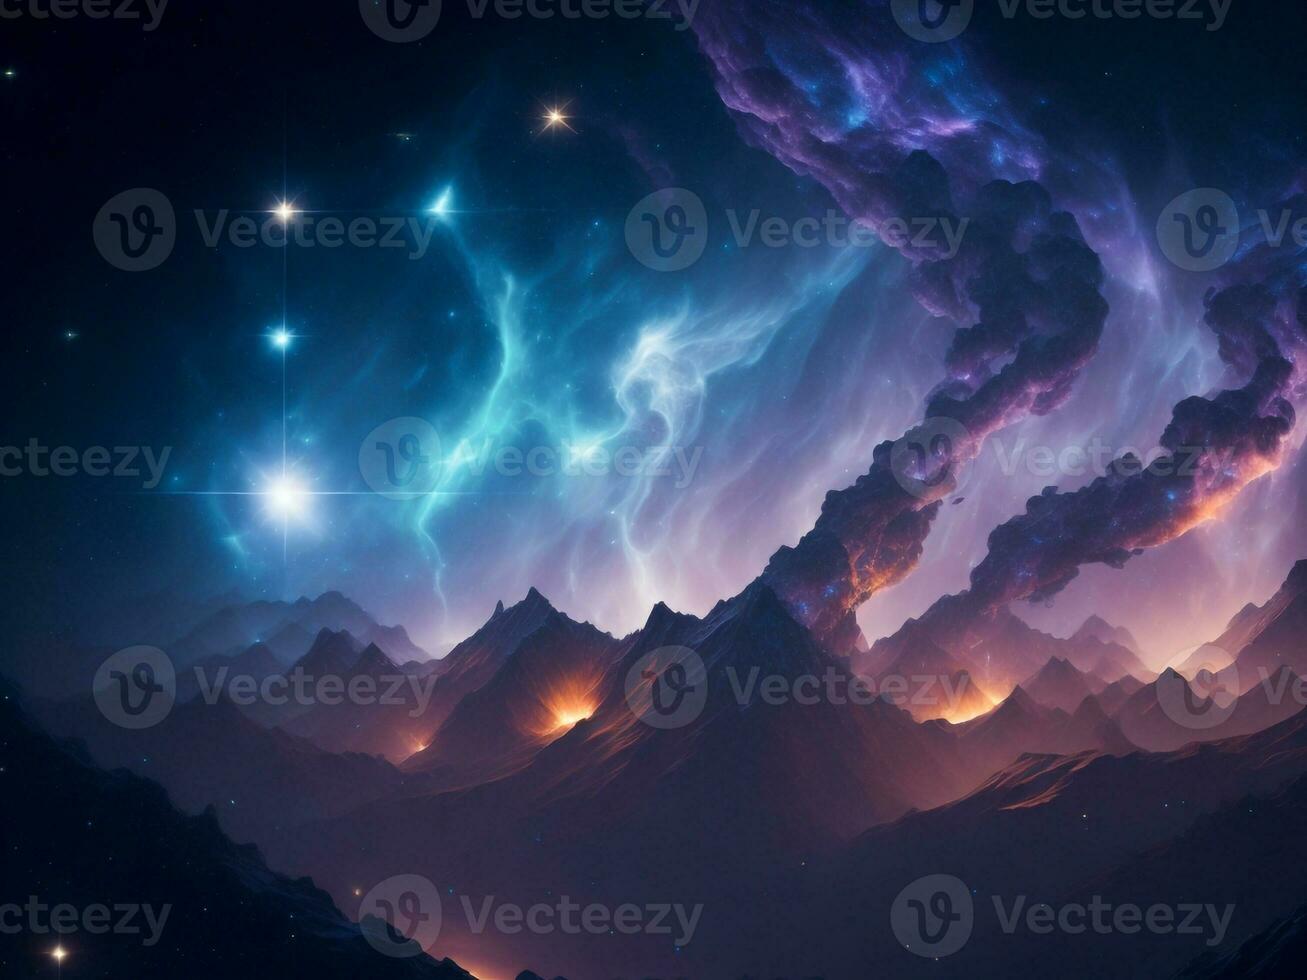 Celestial Wonders Majestic Beauty of a Vast Galaxy-Filled Sky Illuminated by Stars, Ai Generative photo